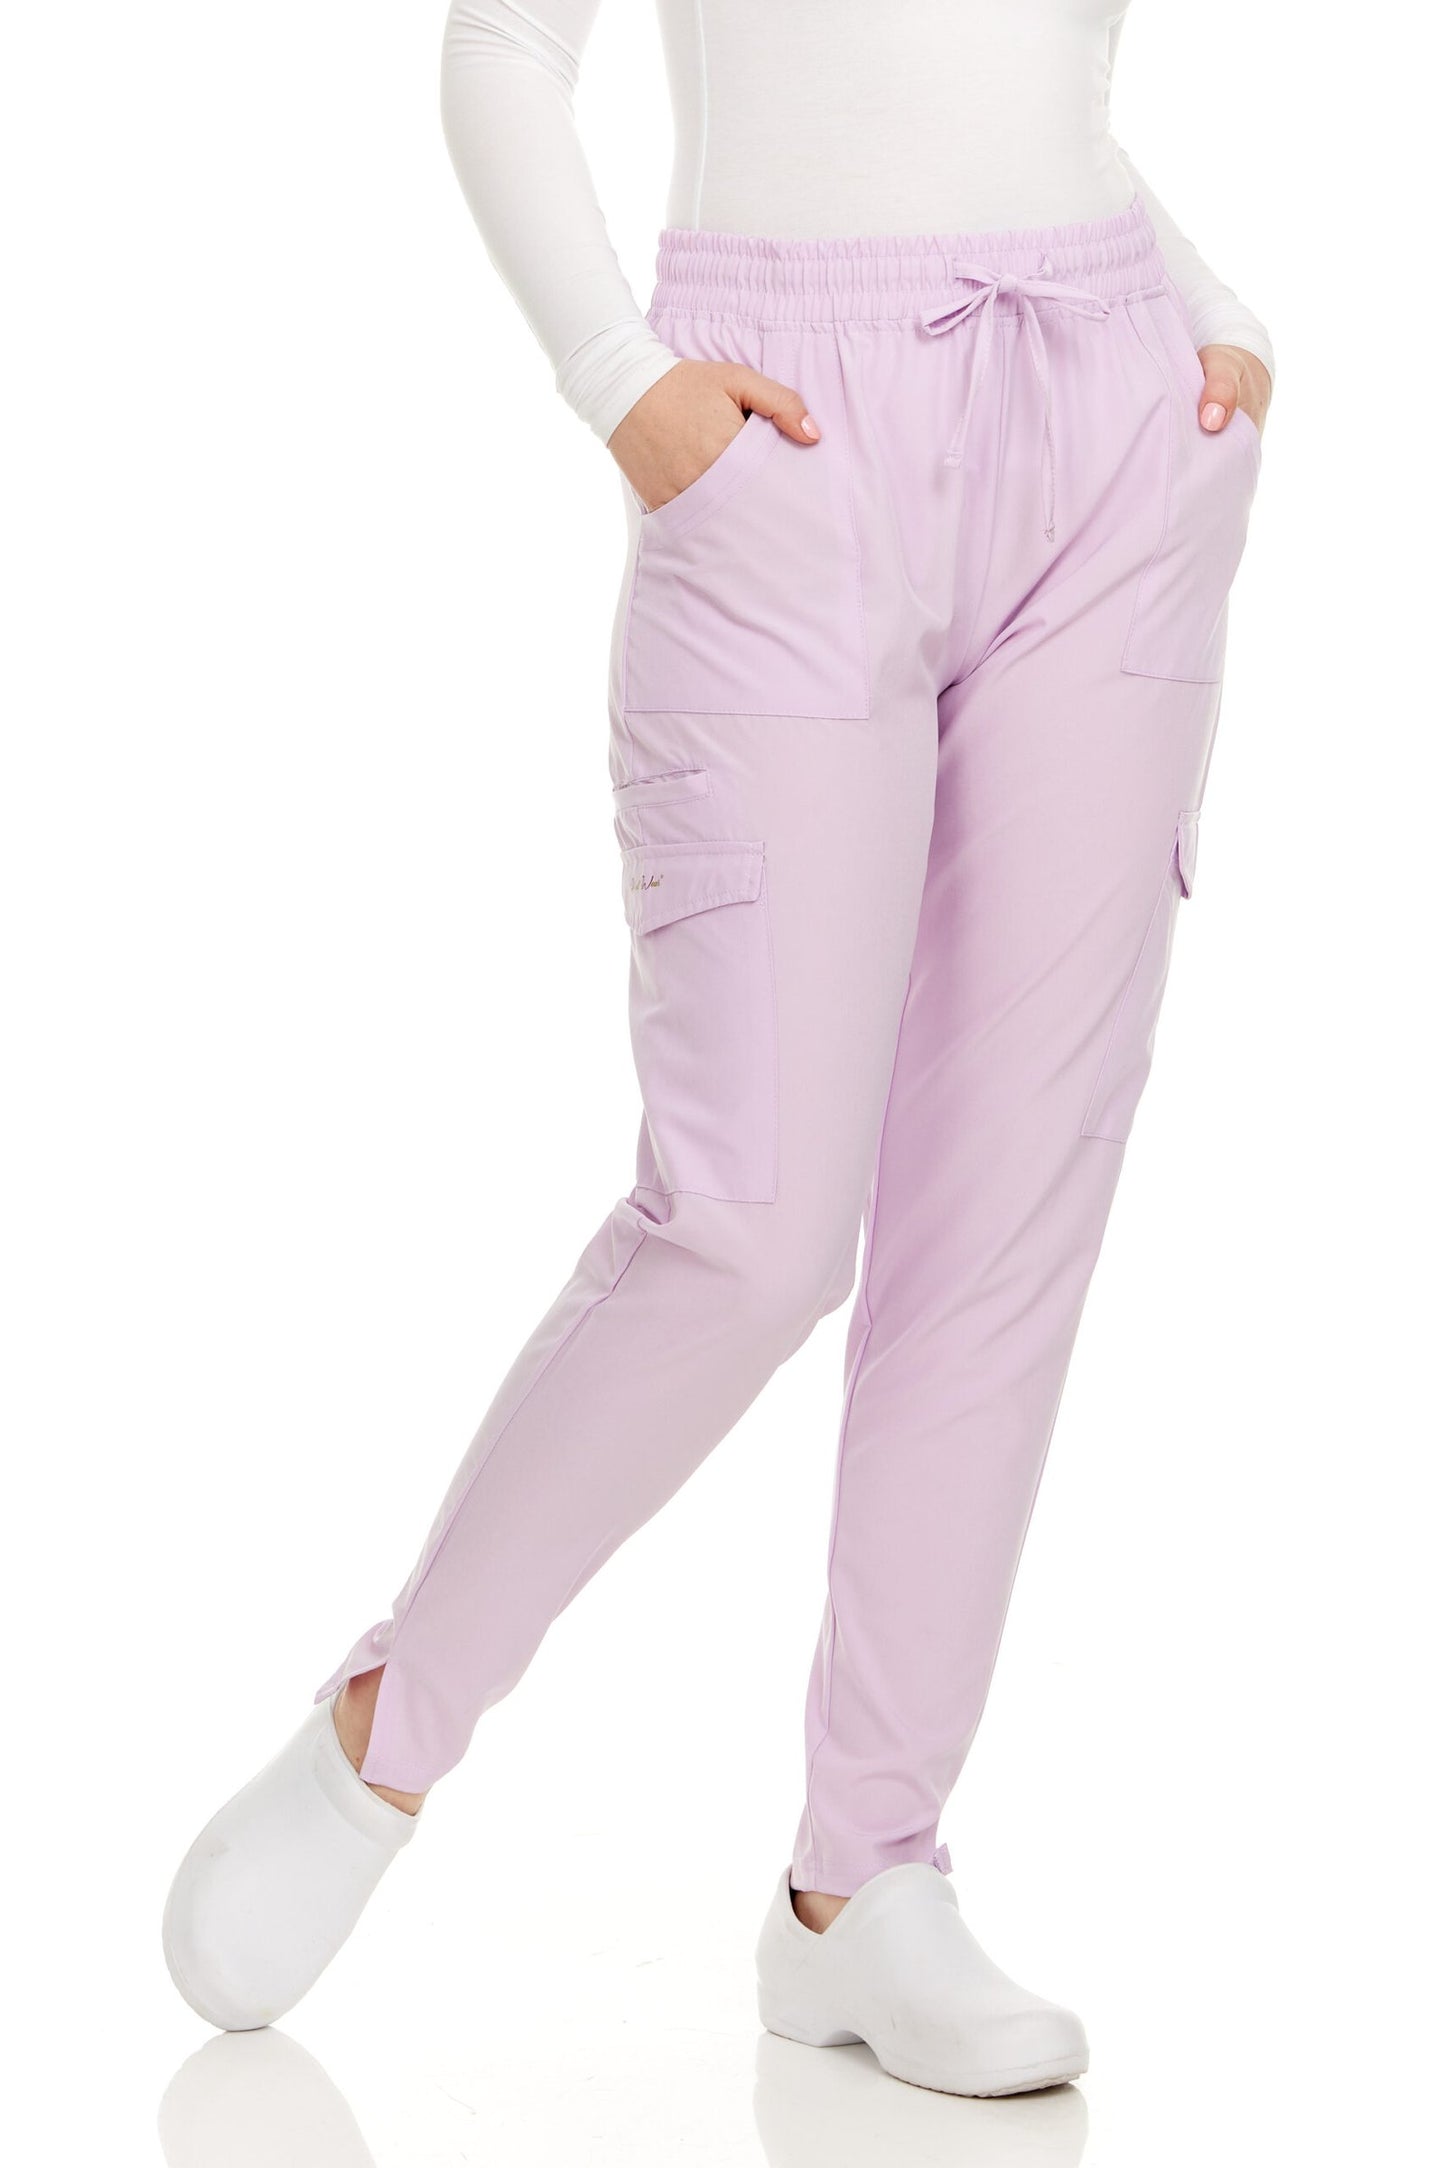 Heal+Wear Women's Medical Scrub Pants - DDP019